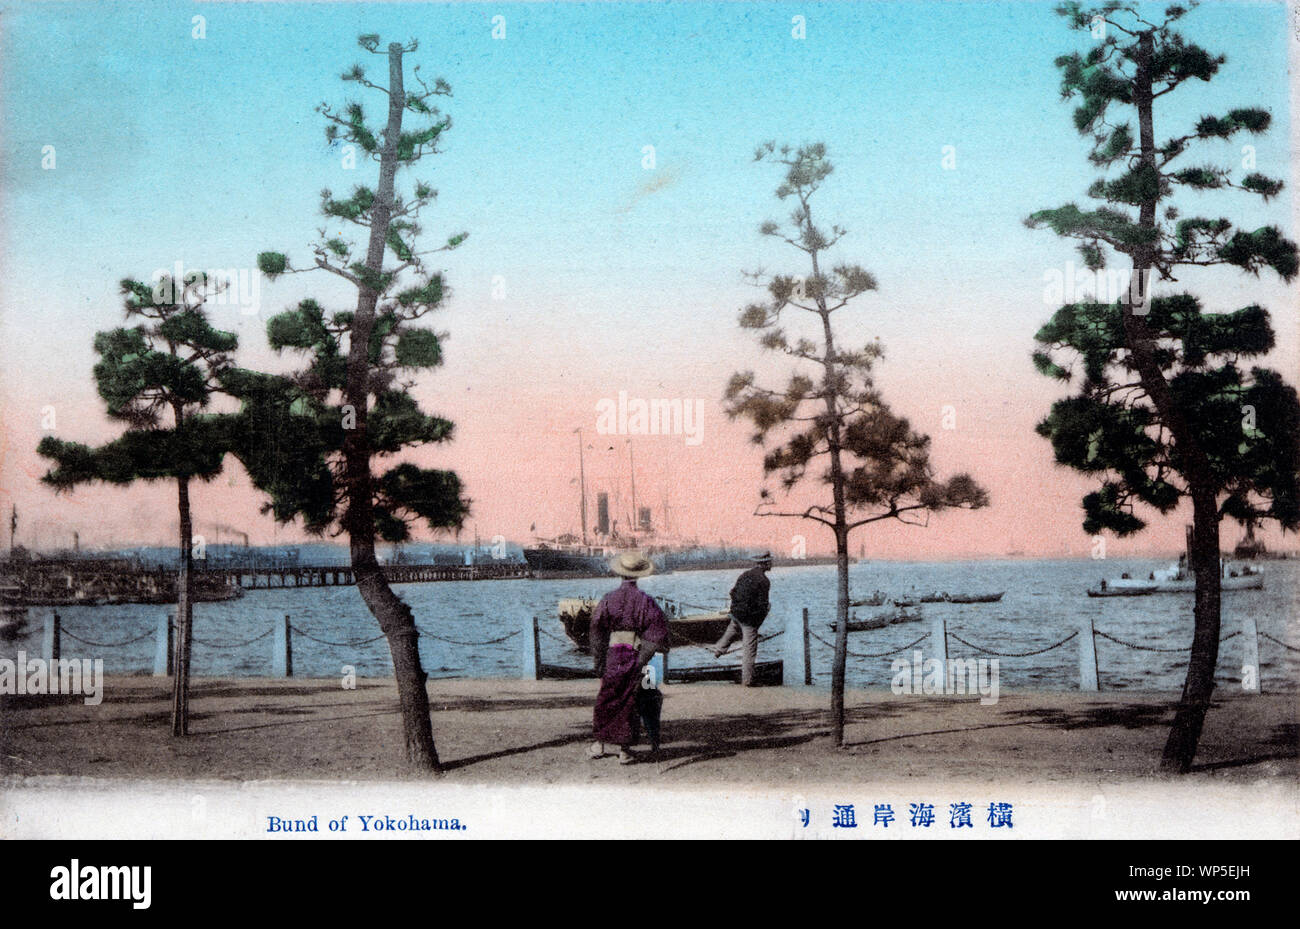 [ 1910s Japan - Yokohama Harbor ] —   View of Yokohama Harbor from the Bund in Yokohama, Kanagawa Prefecture. Two men wearing straw hats are observing harbor activities.  20th century vintage postcard. Stock Photo